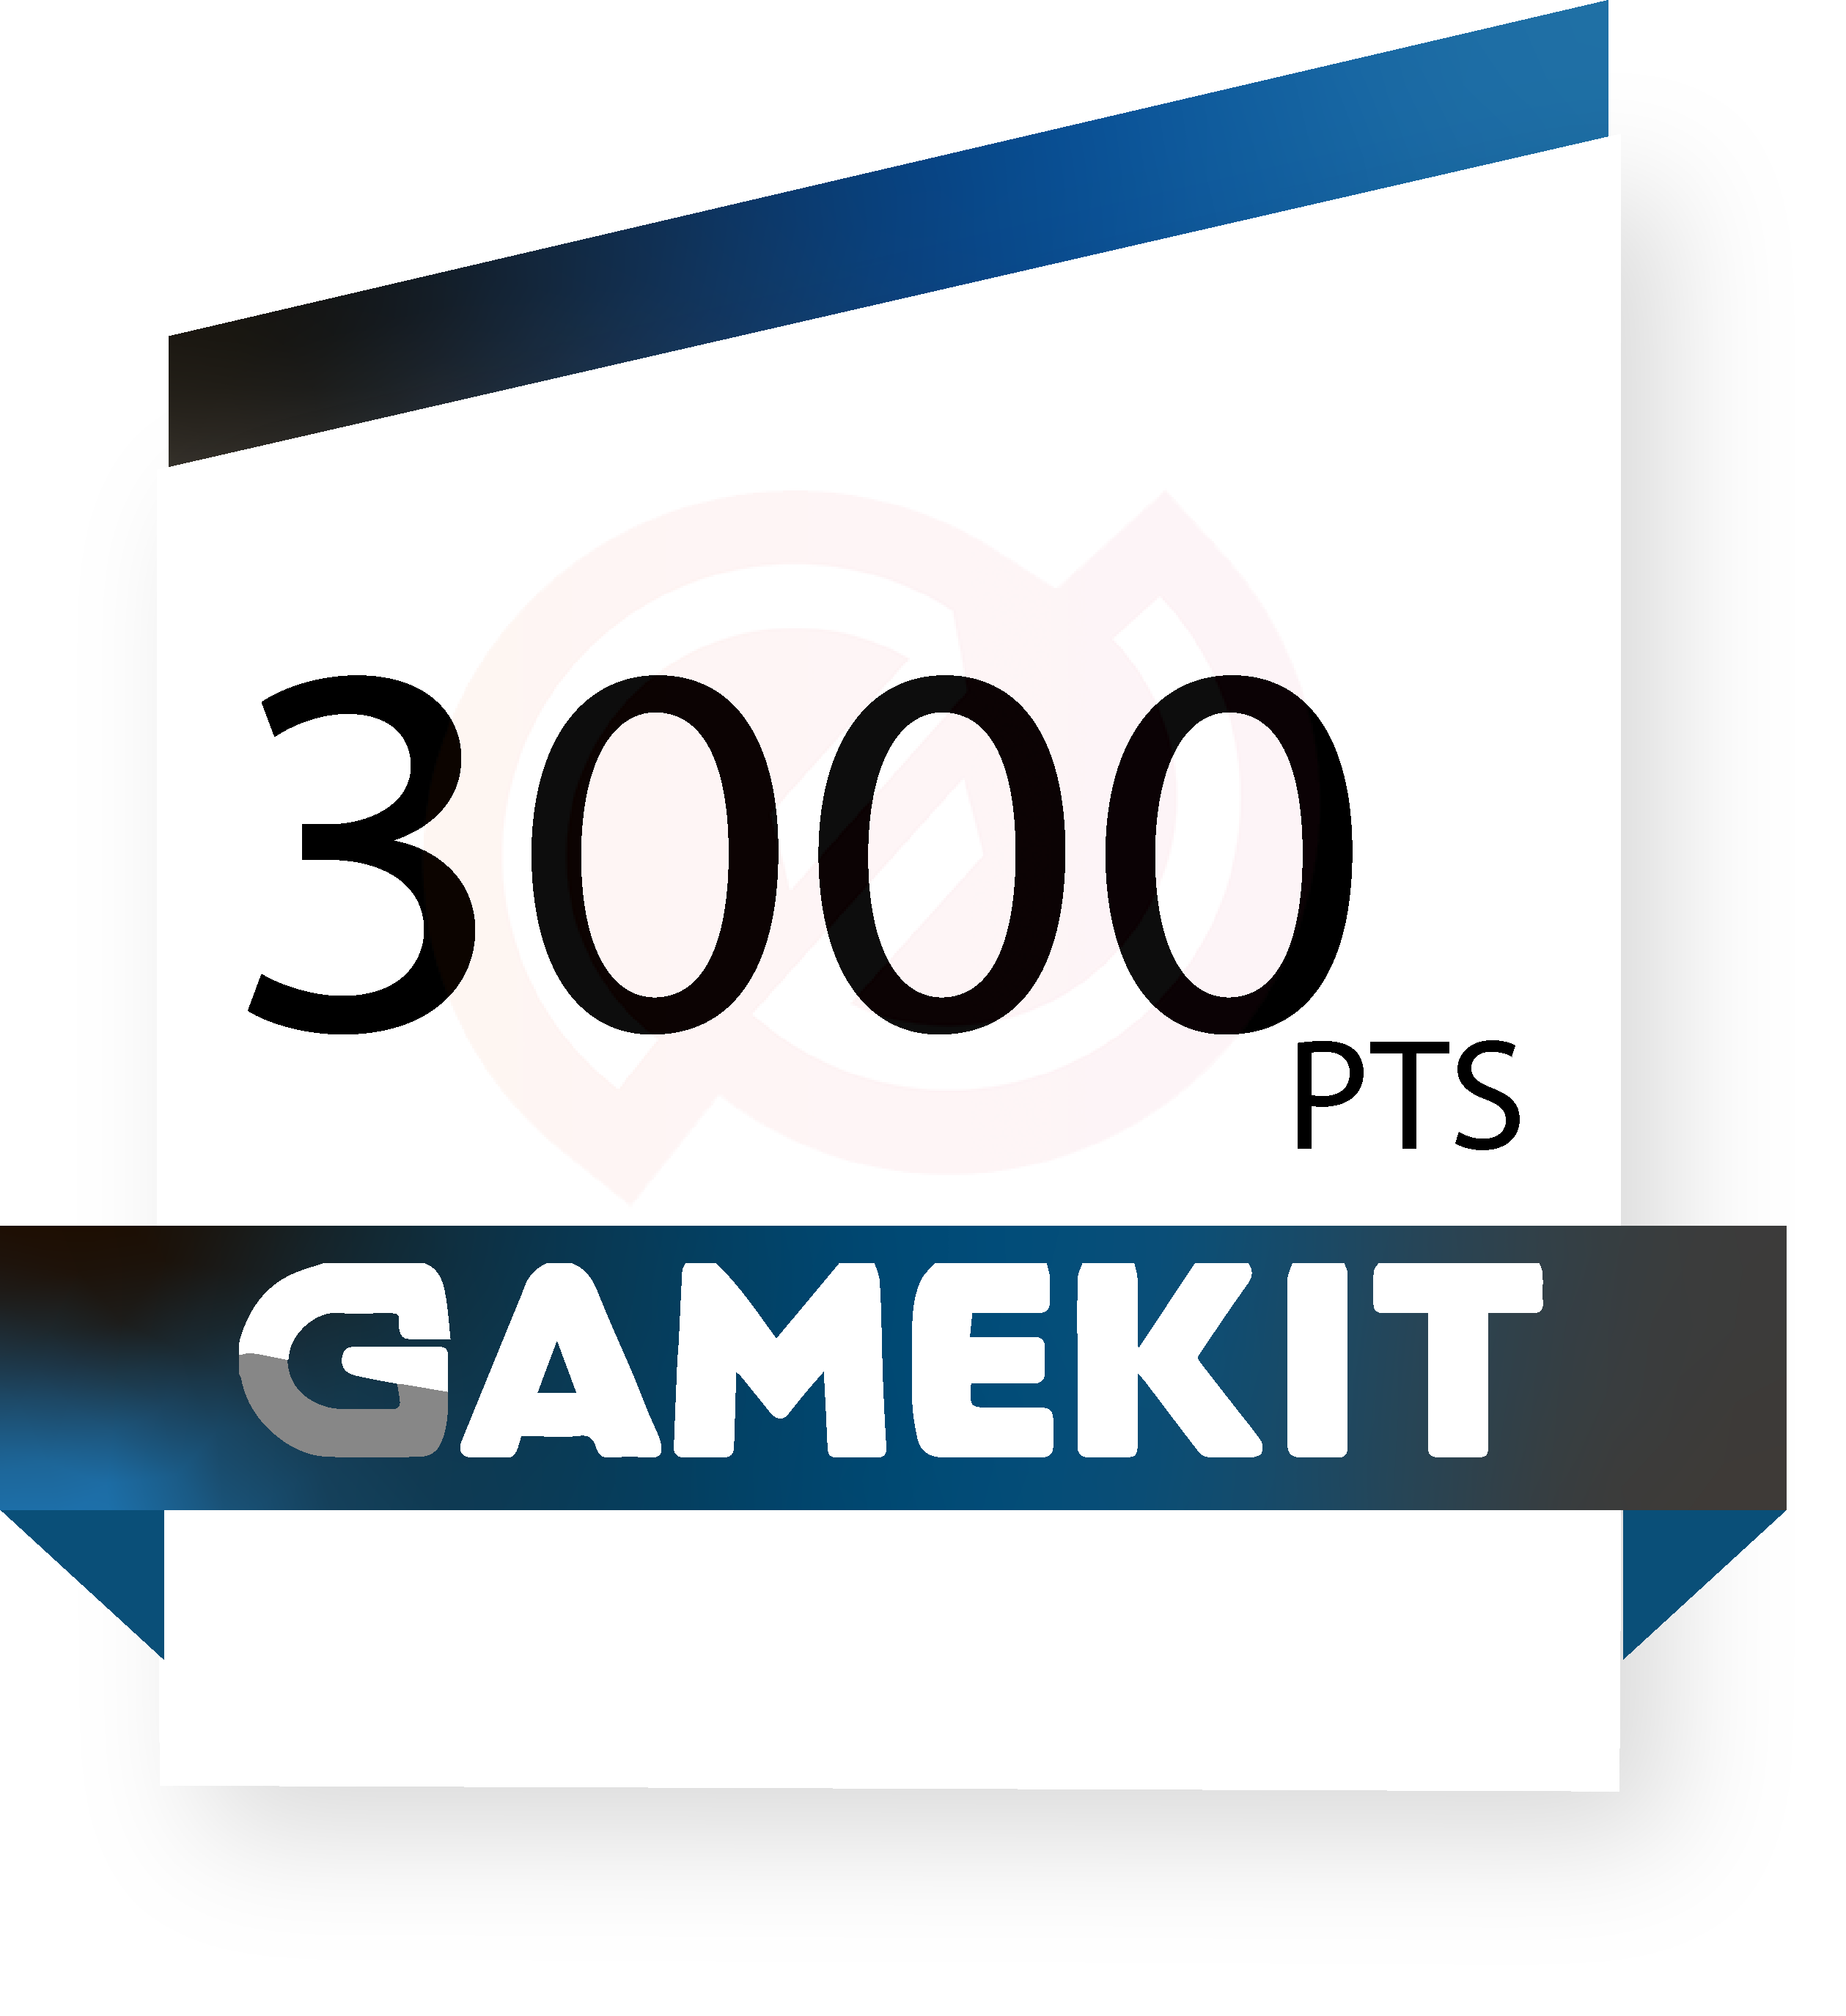 Gamekit : 3000 points